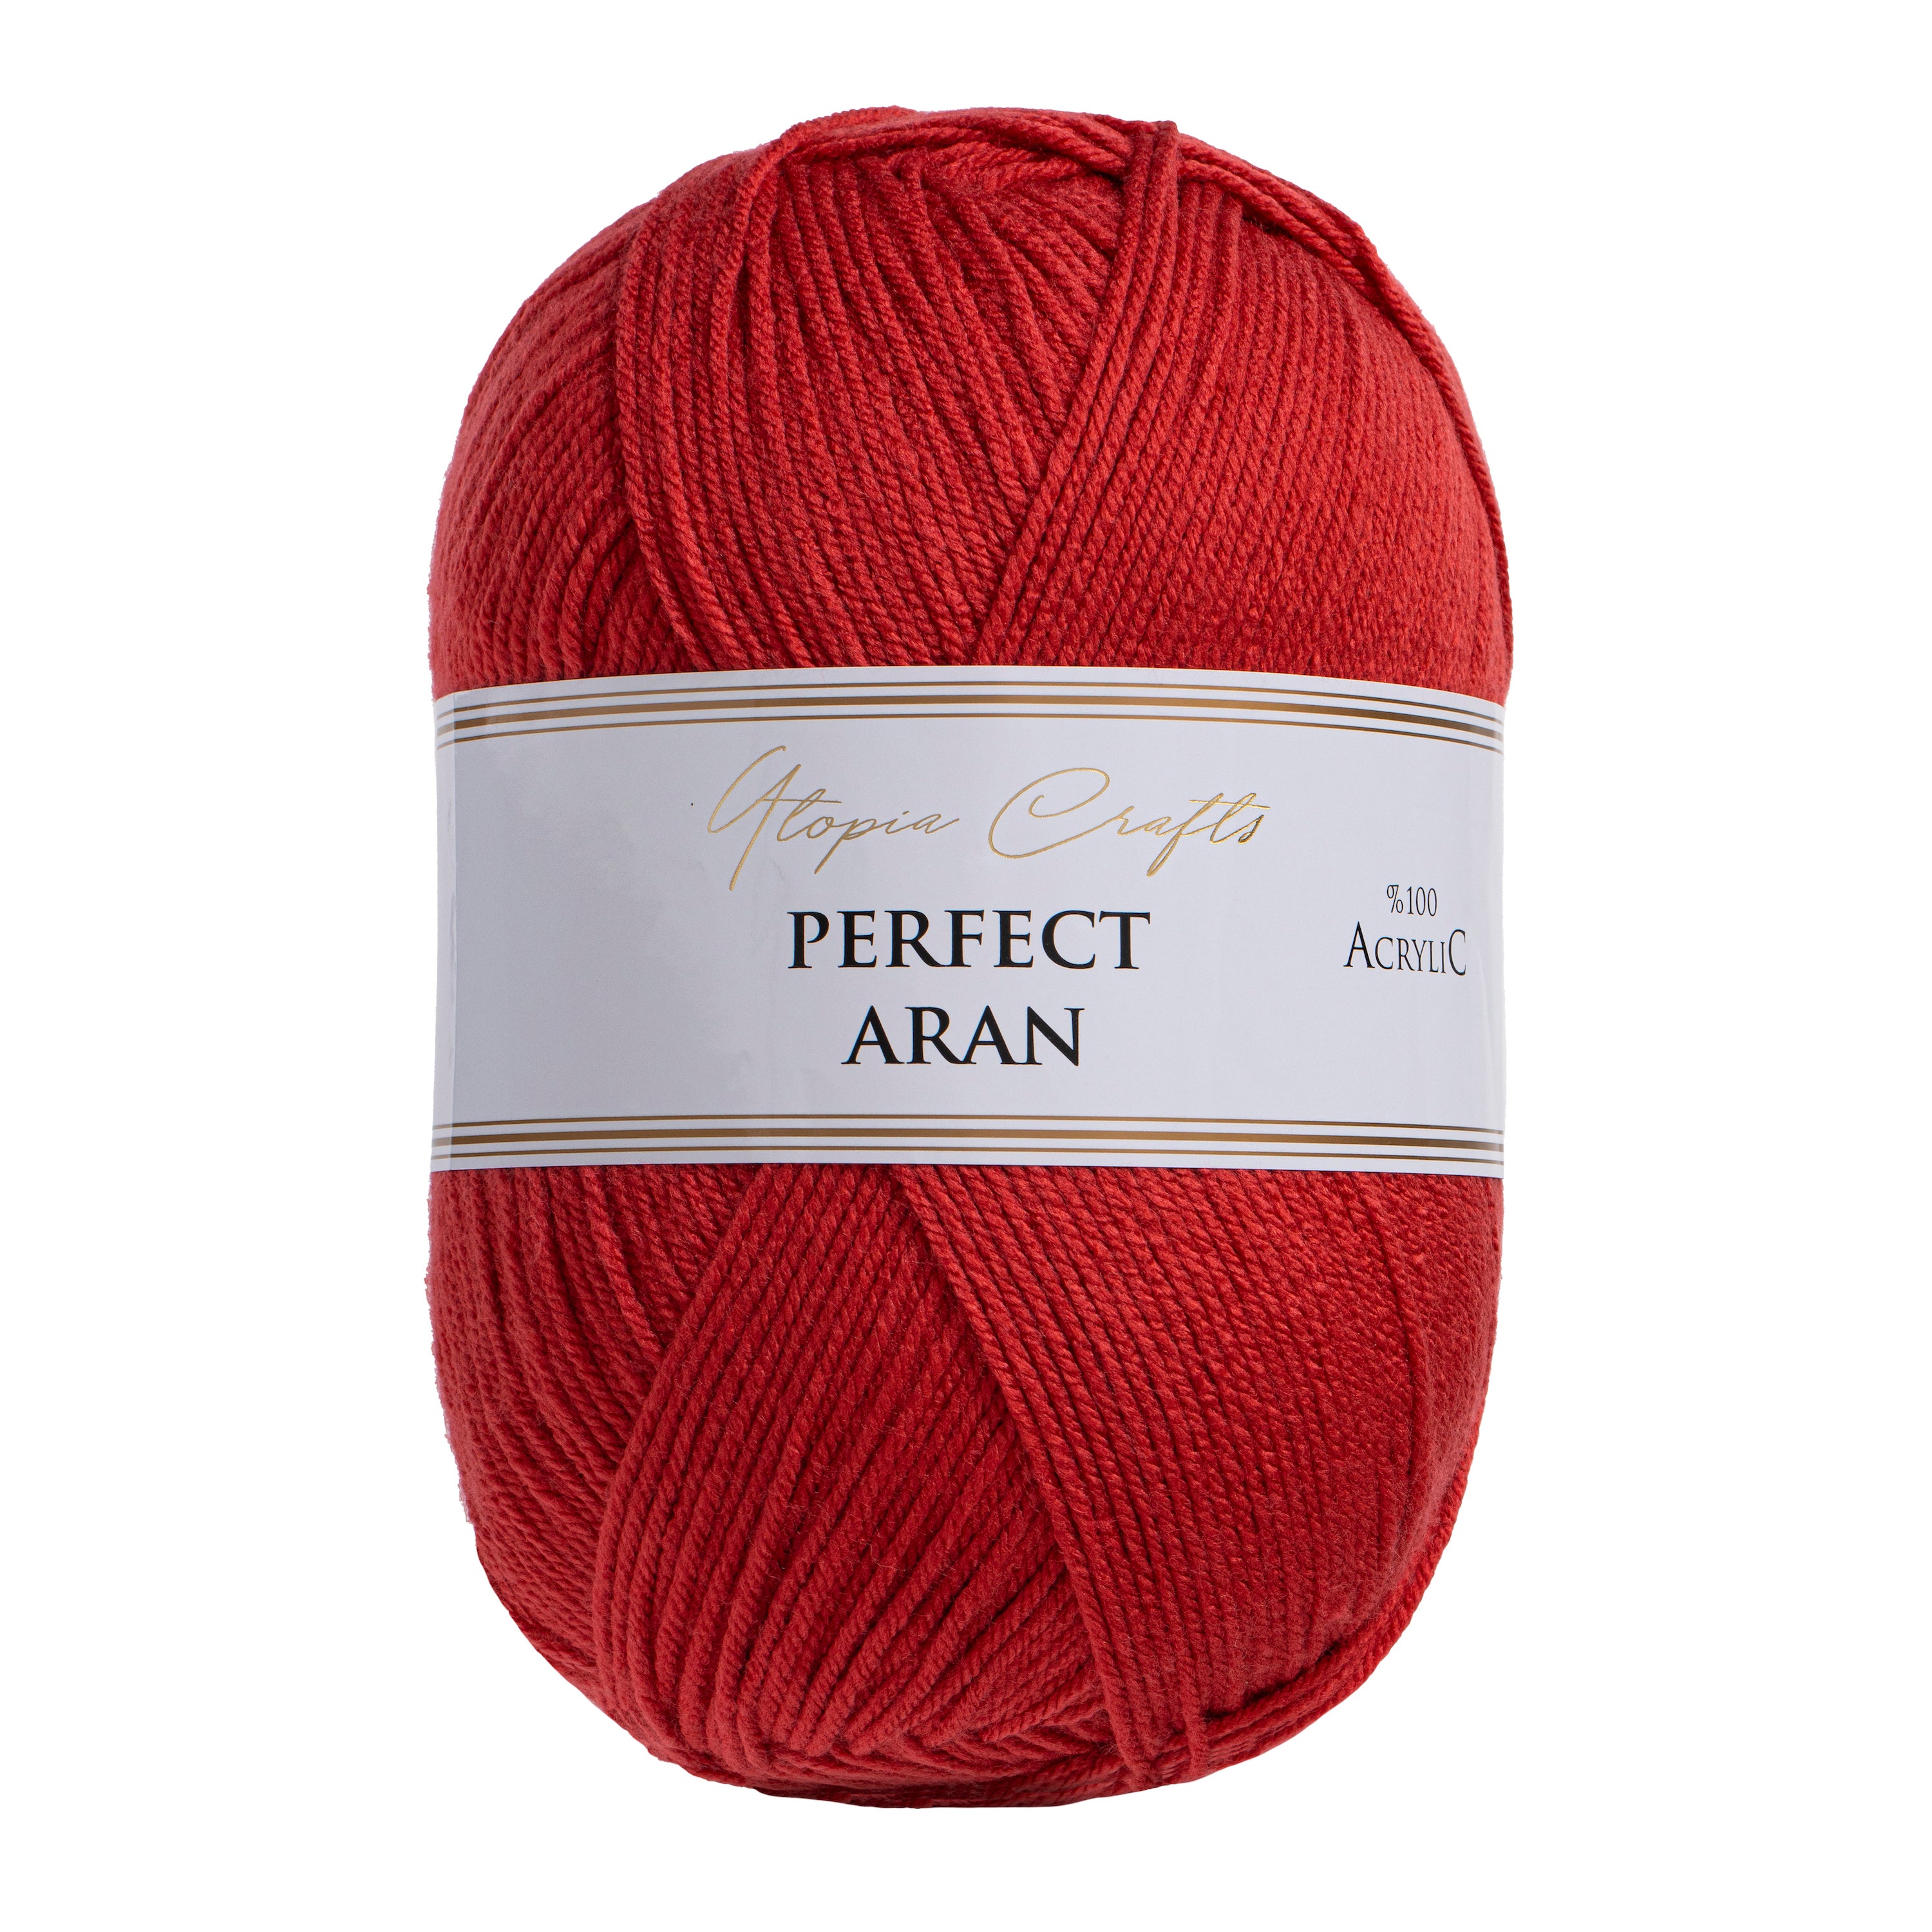 Utopia Crafts Aran Knitting and Crochet Yarn, 400g [Red Orange]